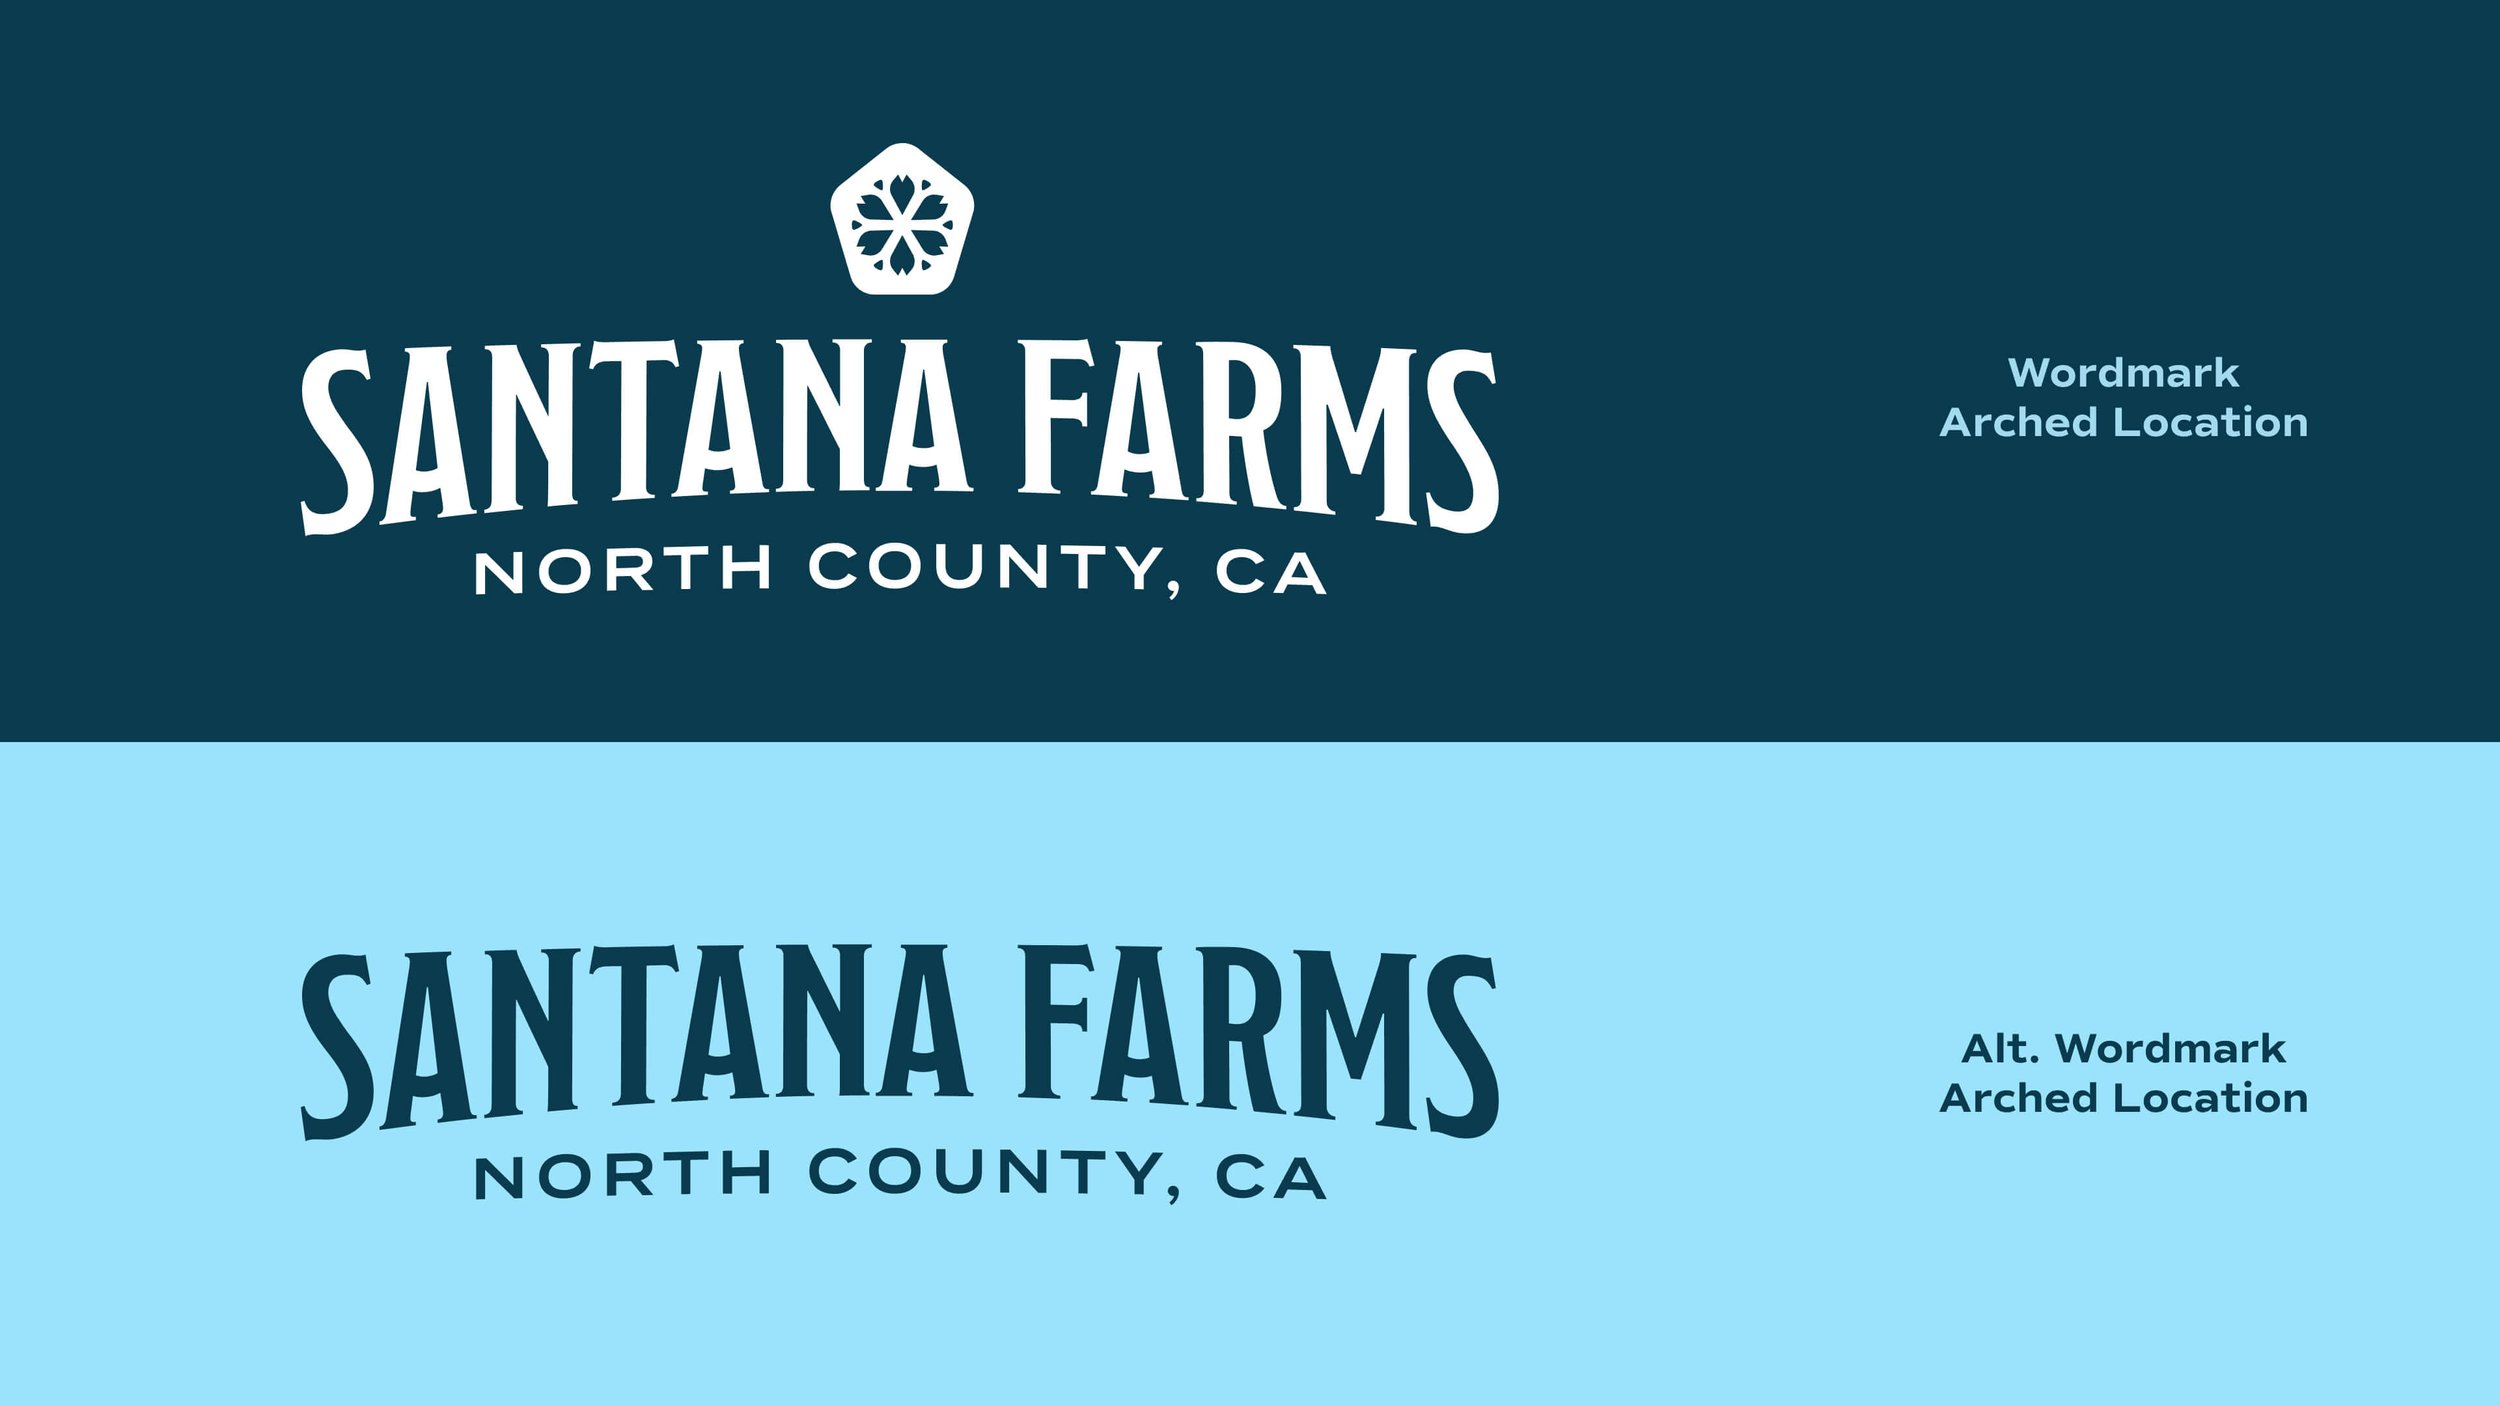 Doc-Reed-Brand-Designer-NC-Charlotte-Santana Farms Wordmark Arched Location.jpg